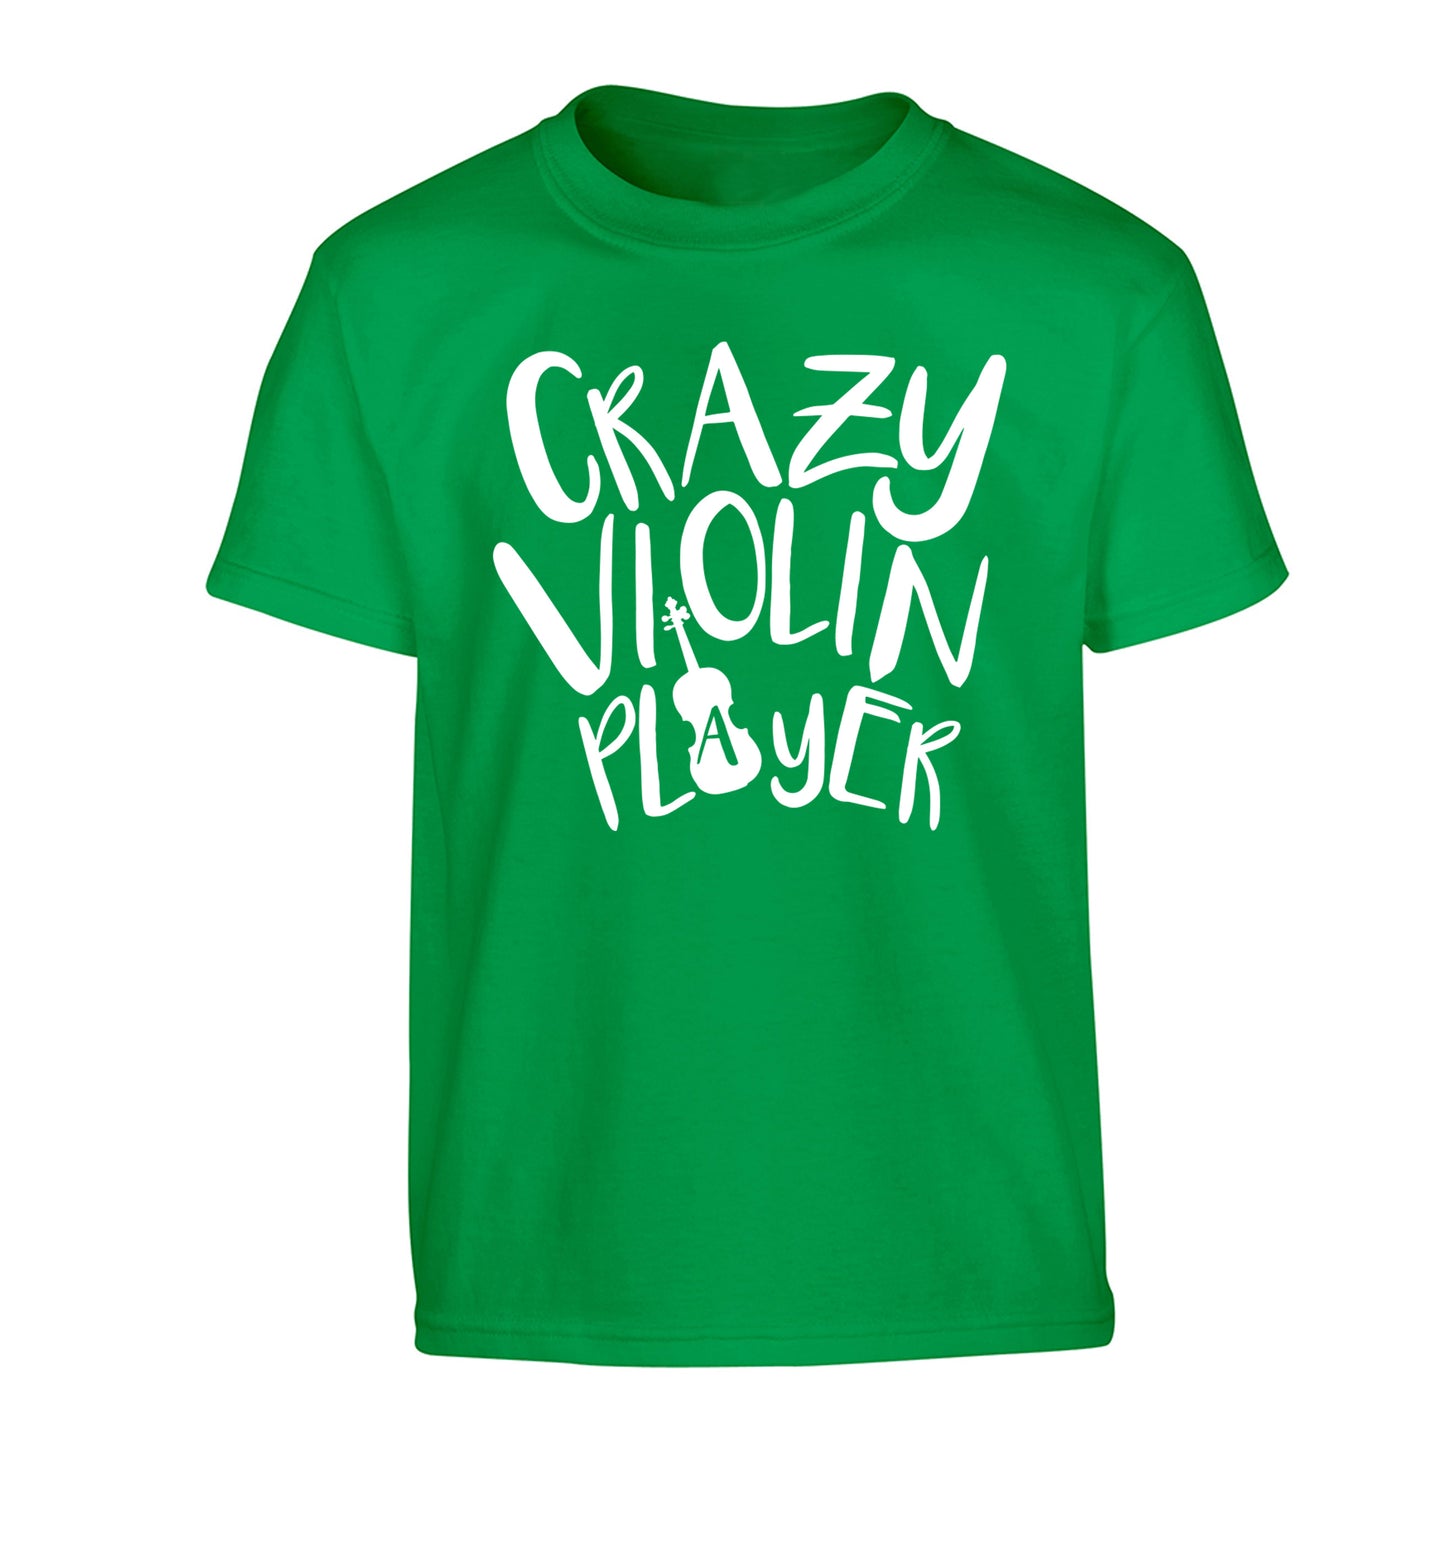 Crazy Violin Player Children's green Tshirt 12-13 Years